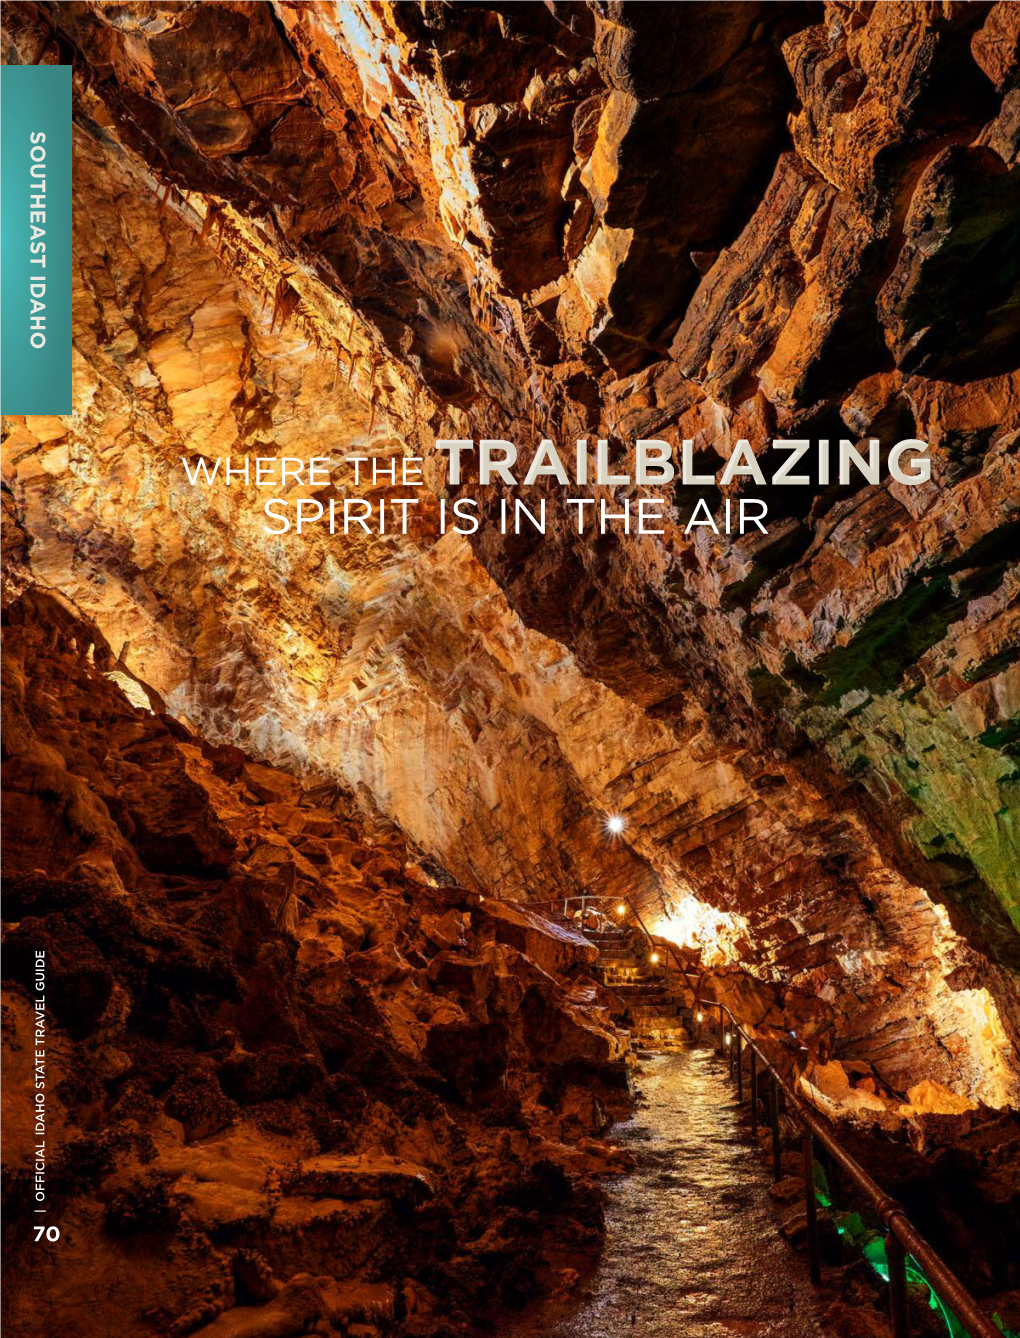 Trailblazing Trailblazing Spirit Is in the Air the in Is Spirit